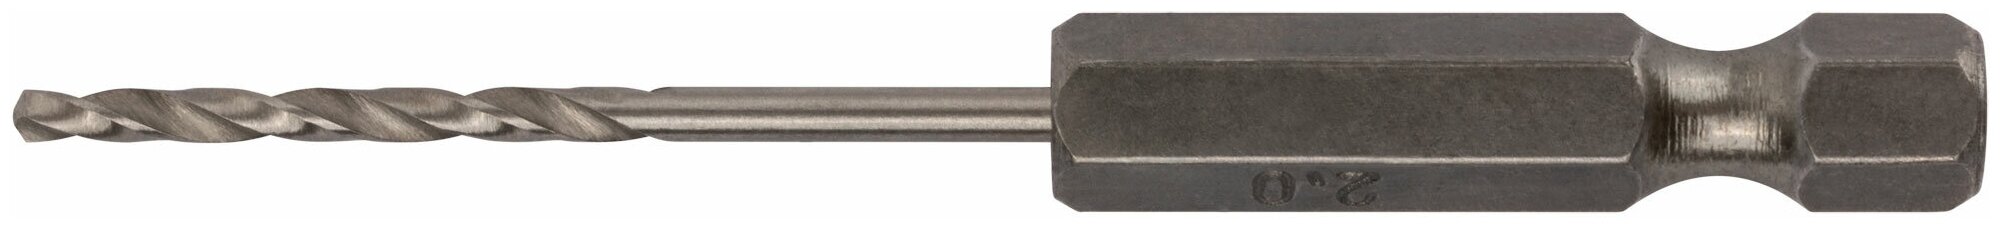 Сверло HSS по металлу, полированное, U-хвостовик под биту, инд. упаковка 2,0 мм